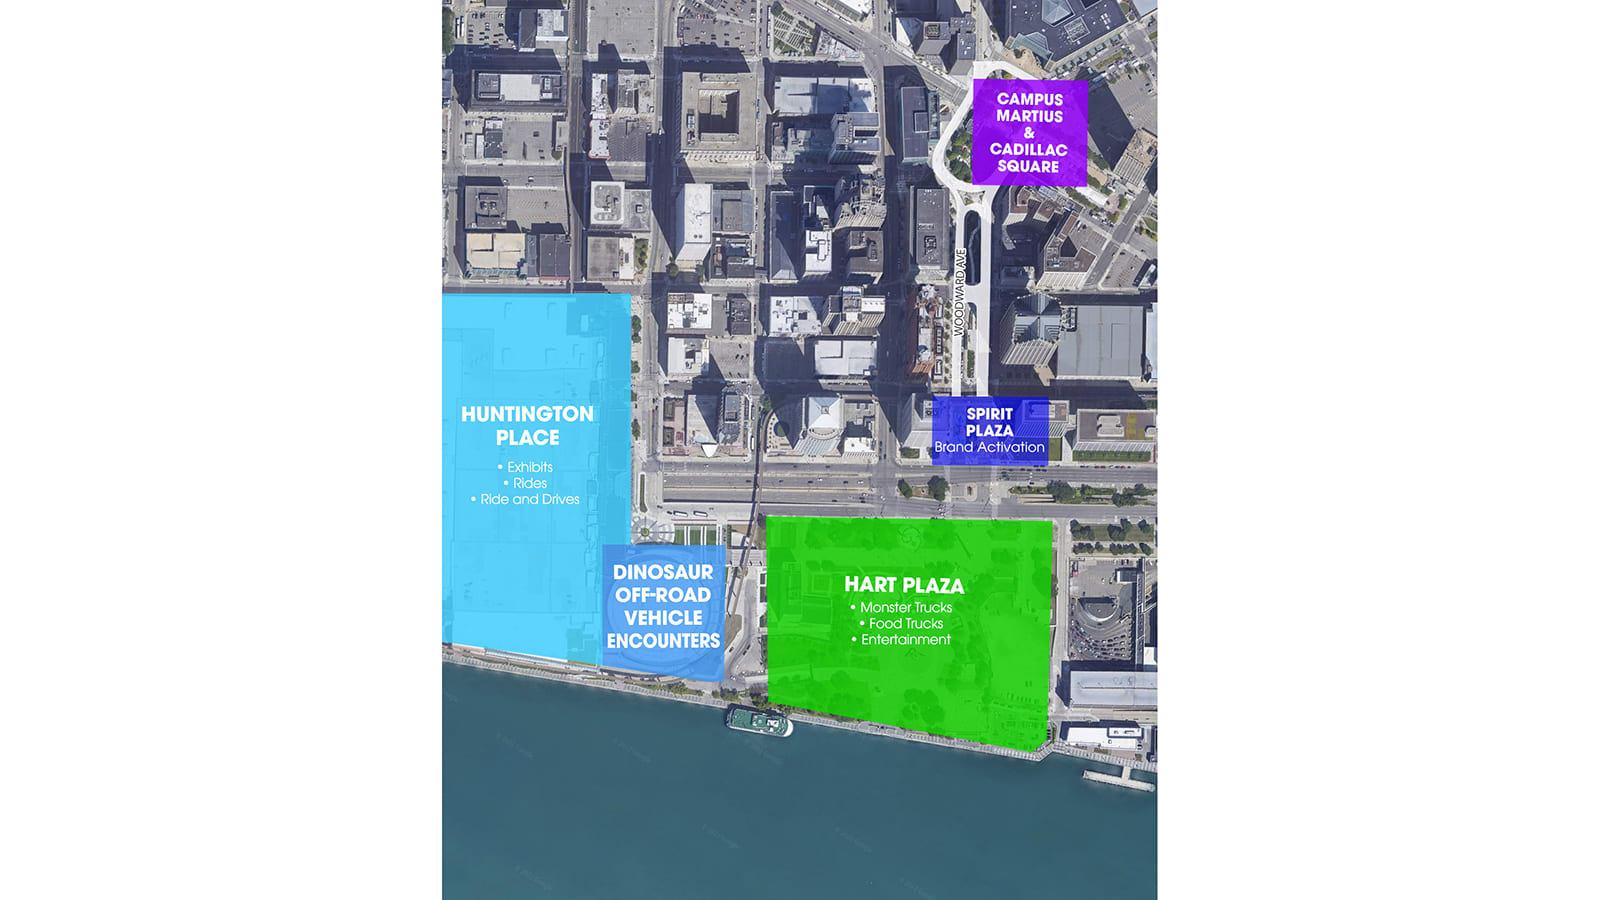 2022 Detroit Auto Show map highlighting Huntington Place, Hart Plaza, Spirit Plaza, Cadillac Square and Camp Martius